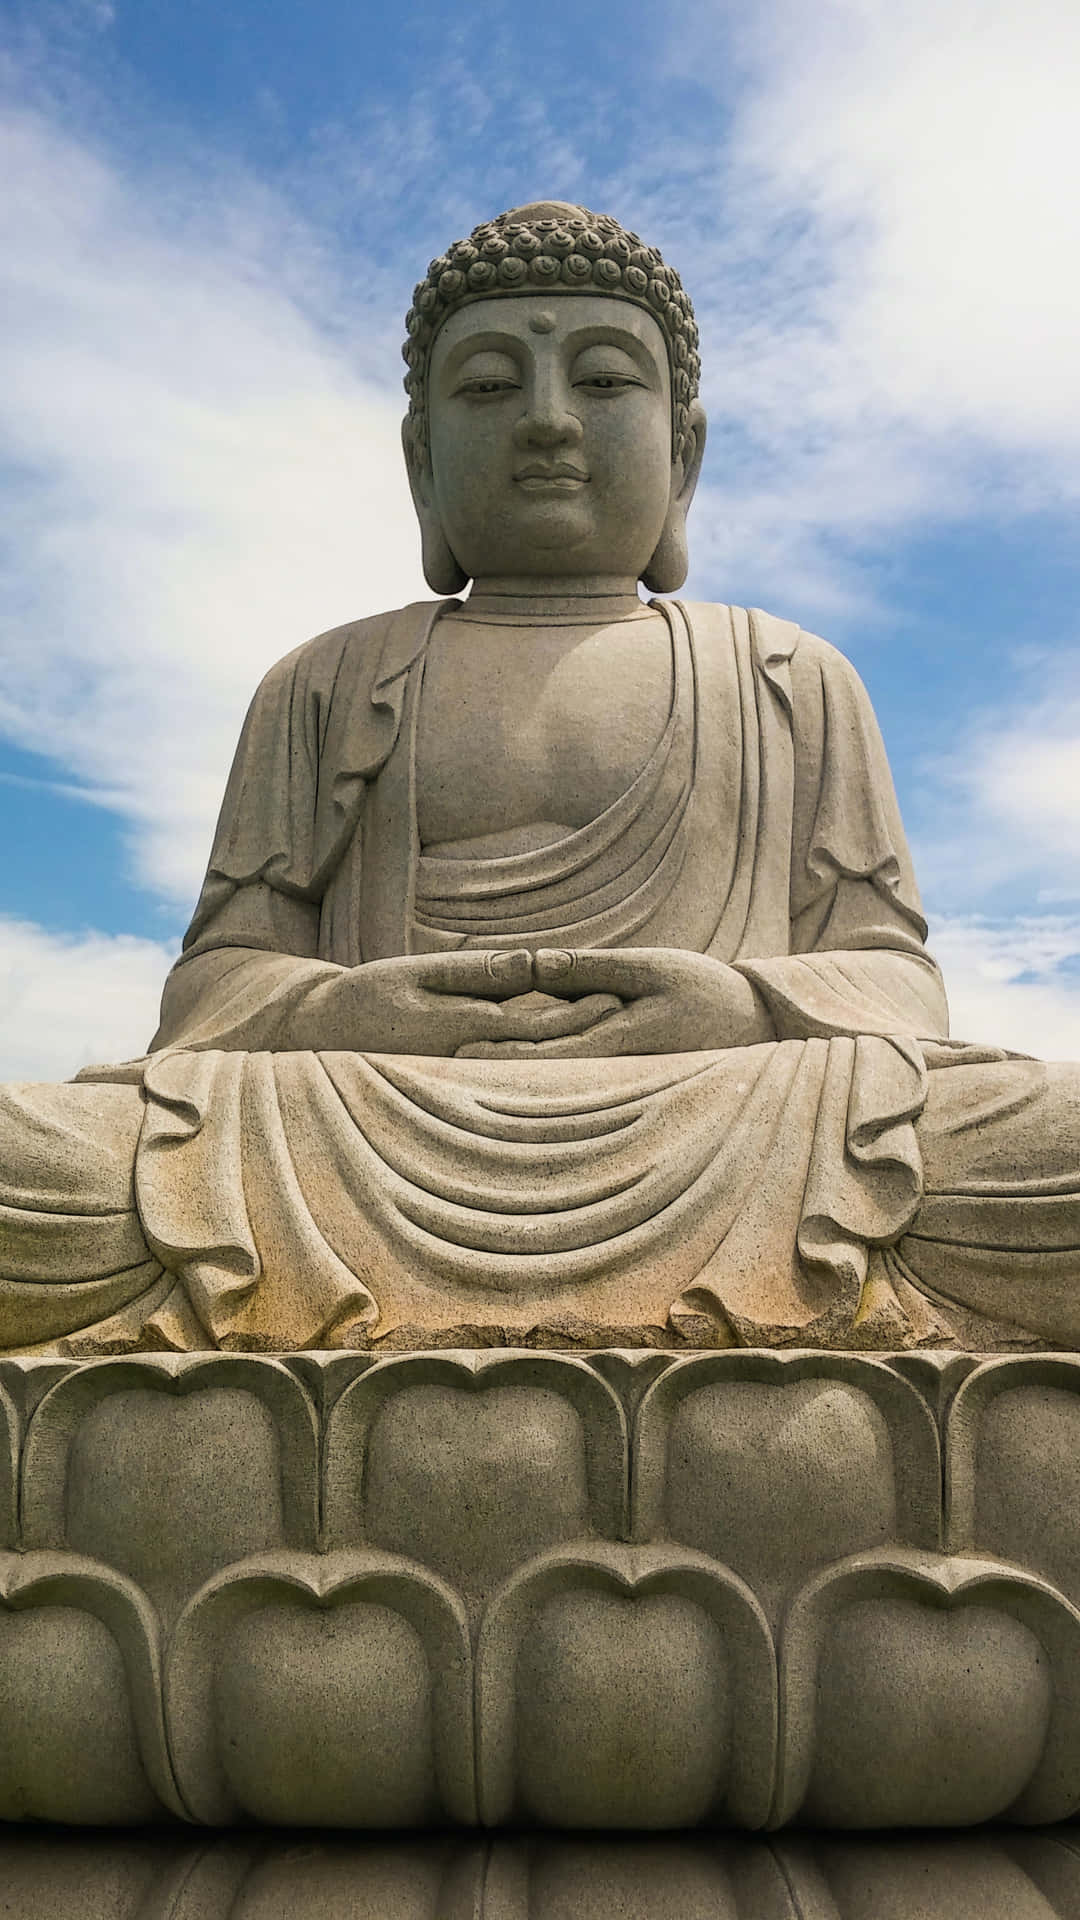 Imagendel Gran Buda Del Budismo.